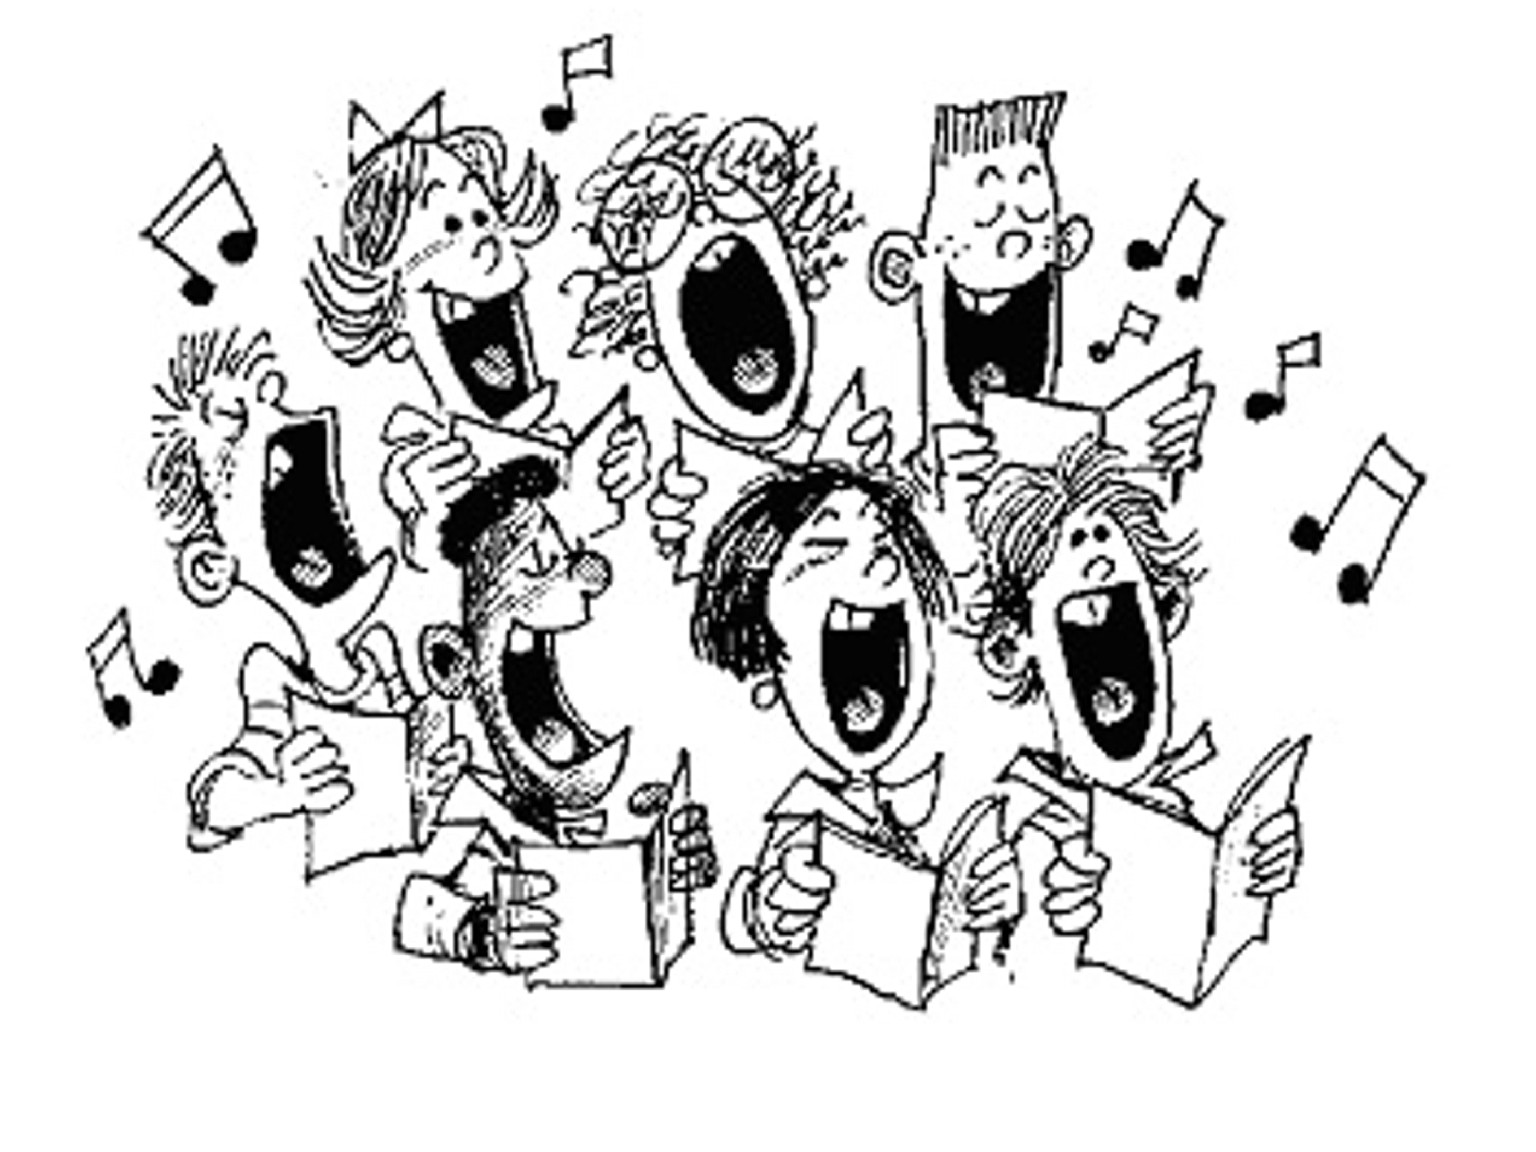 Choir clipart music classroom. A successful approach for